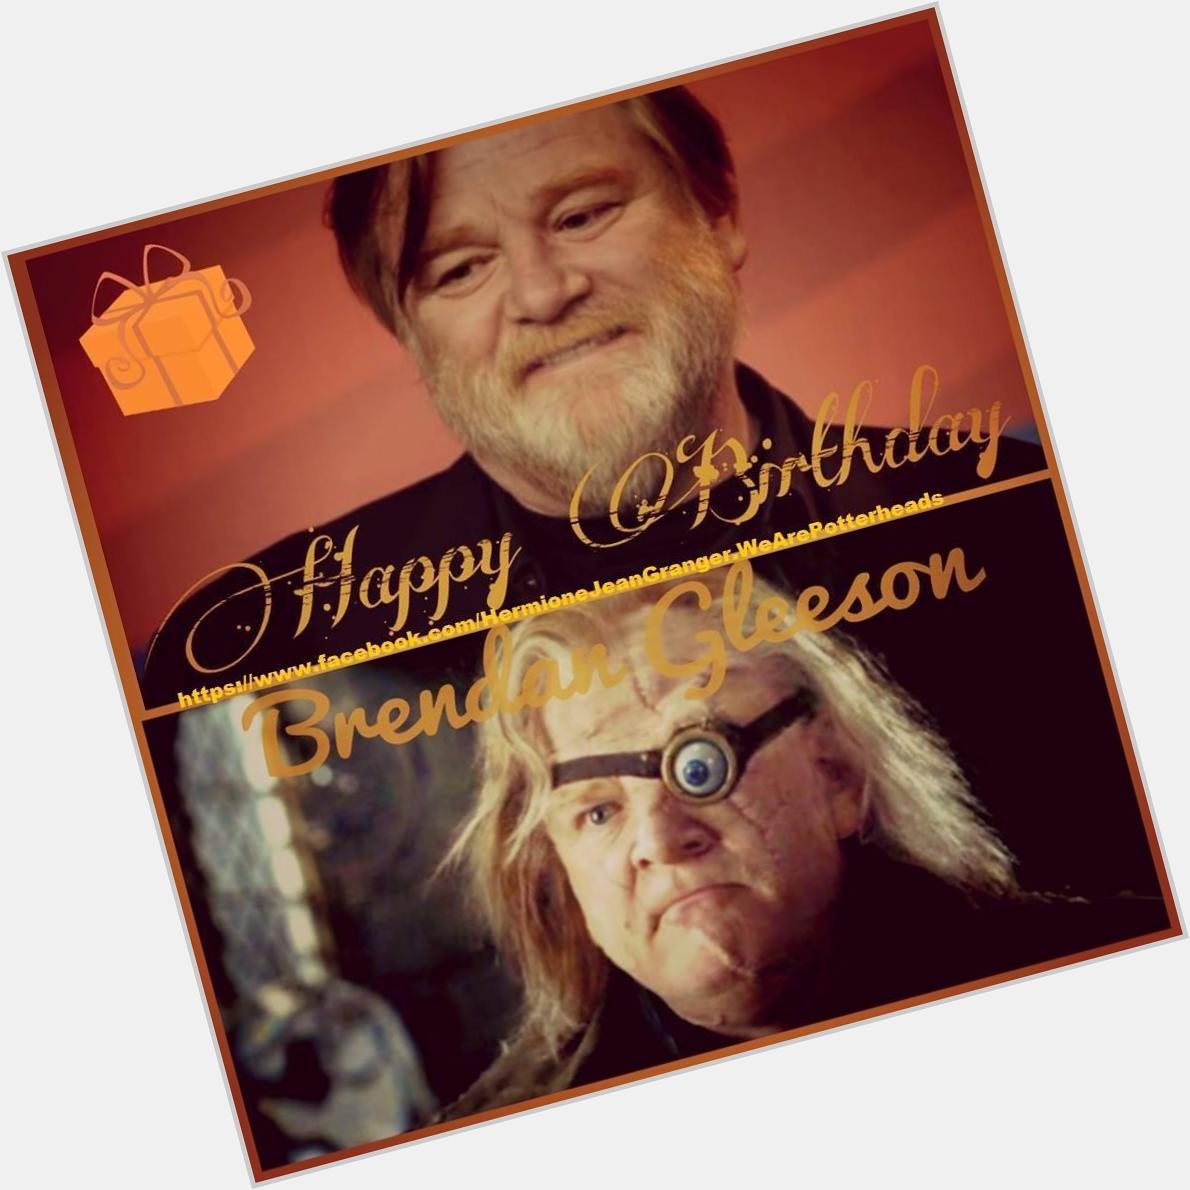 Happy Birthday Mr. Brendan Gleeson.
Professor Alastor Moody (Mad-eye).  